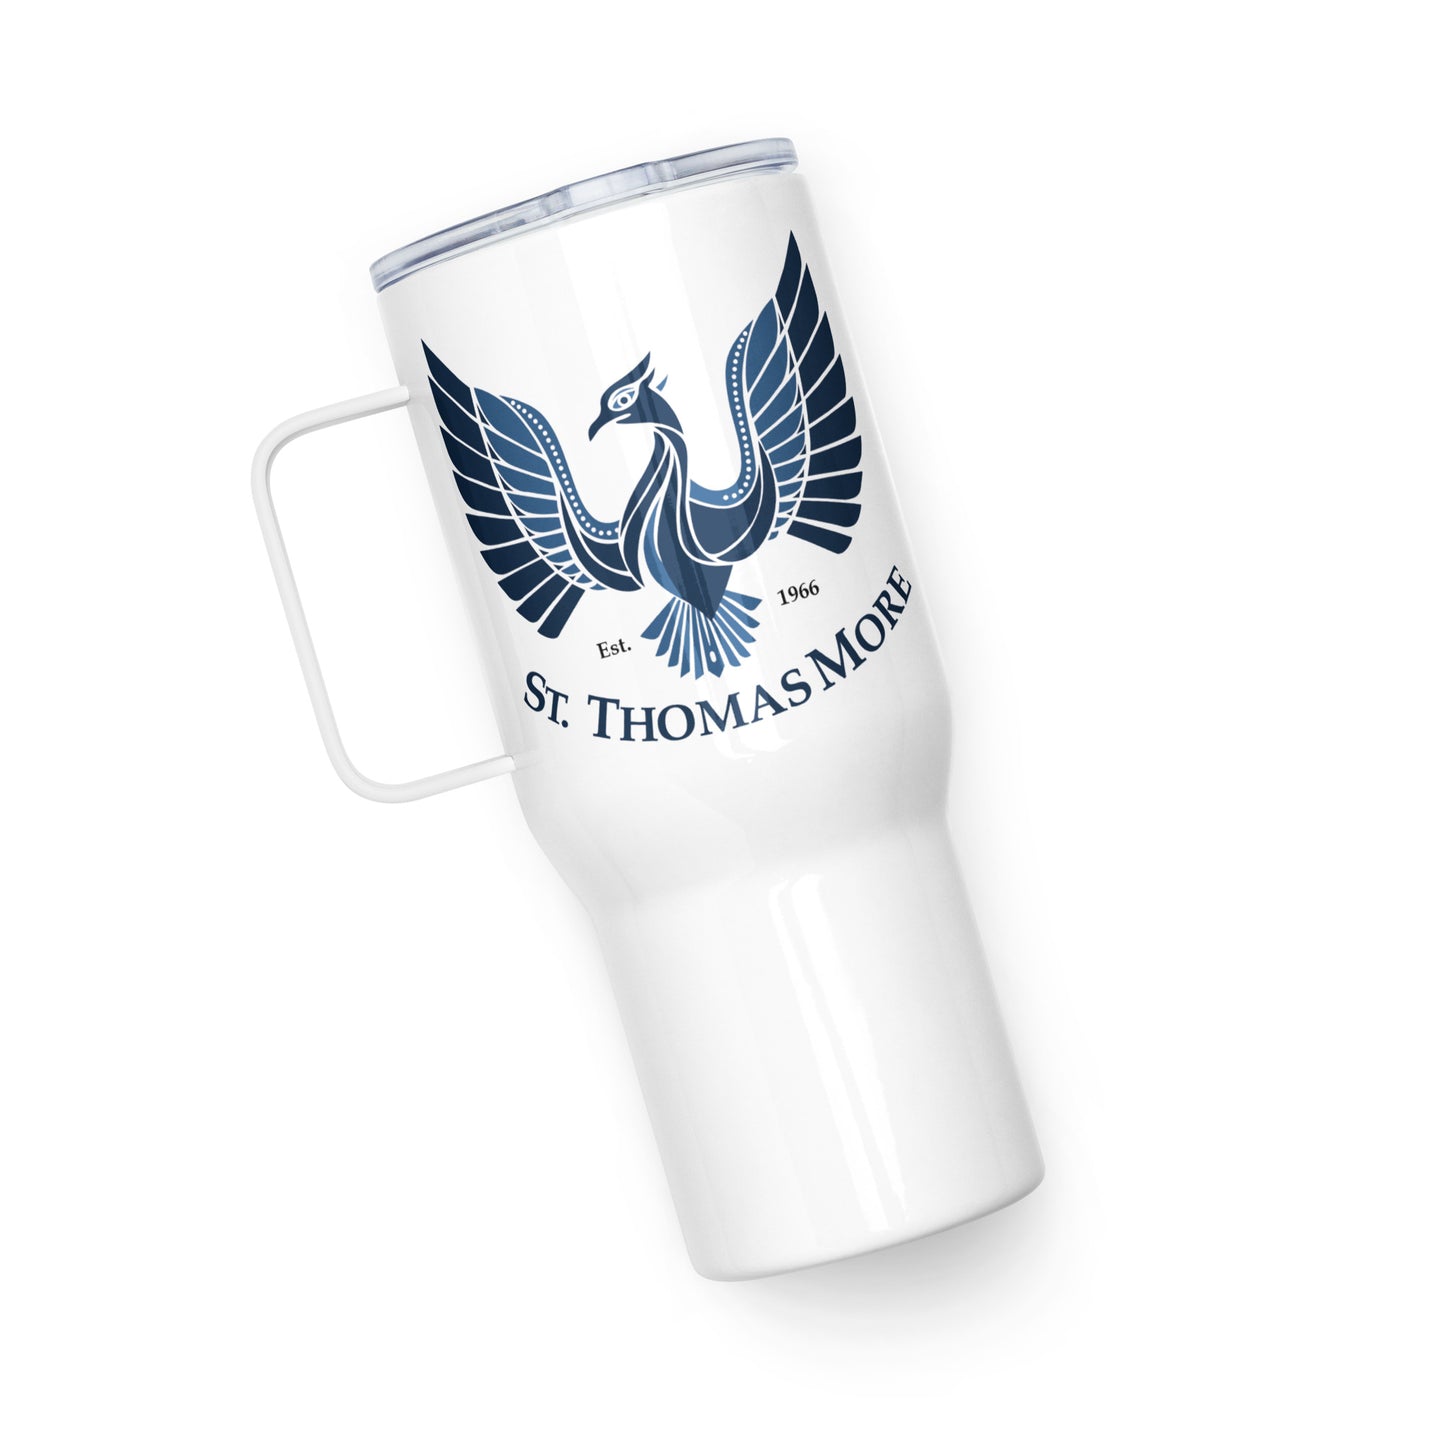 St. Thomas More Travel mug with a handle